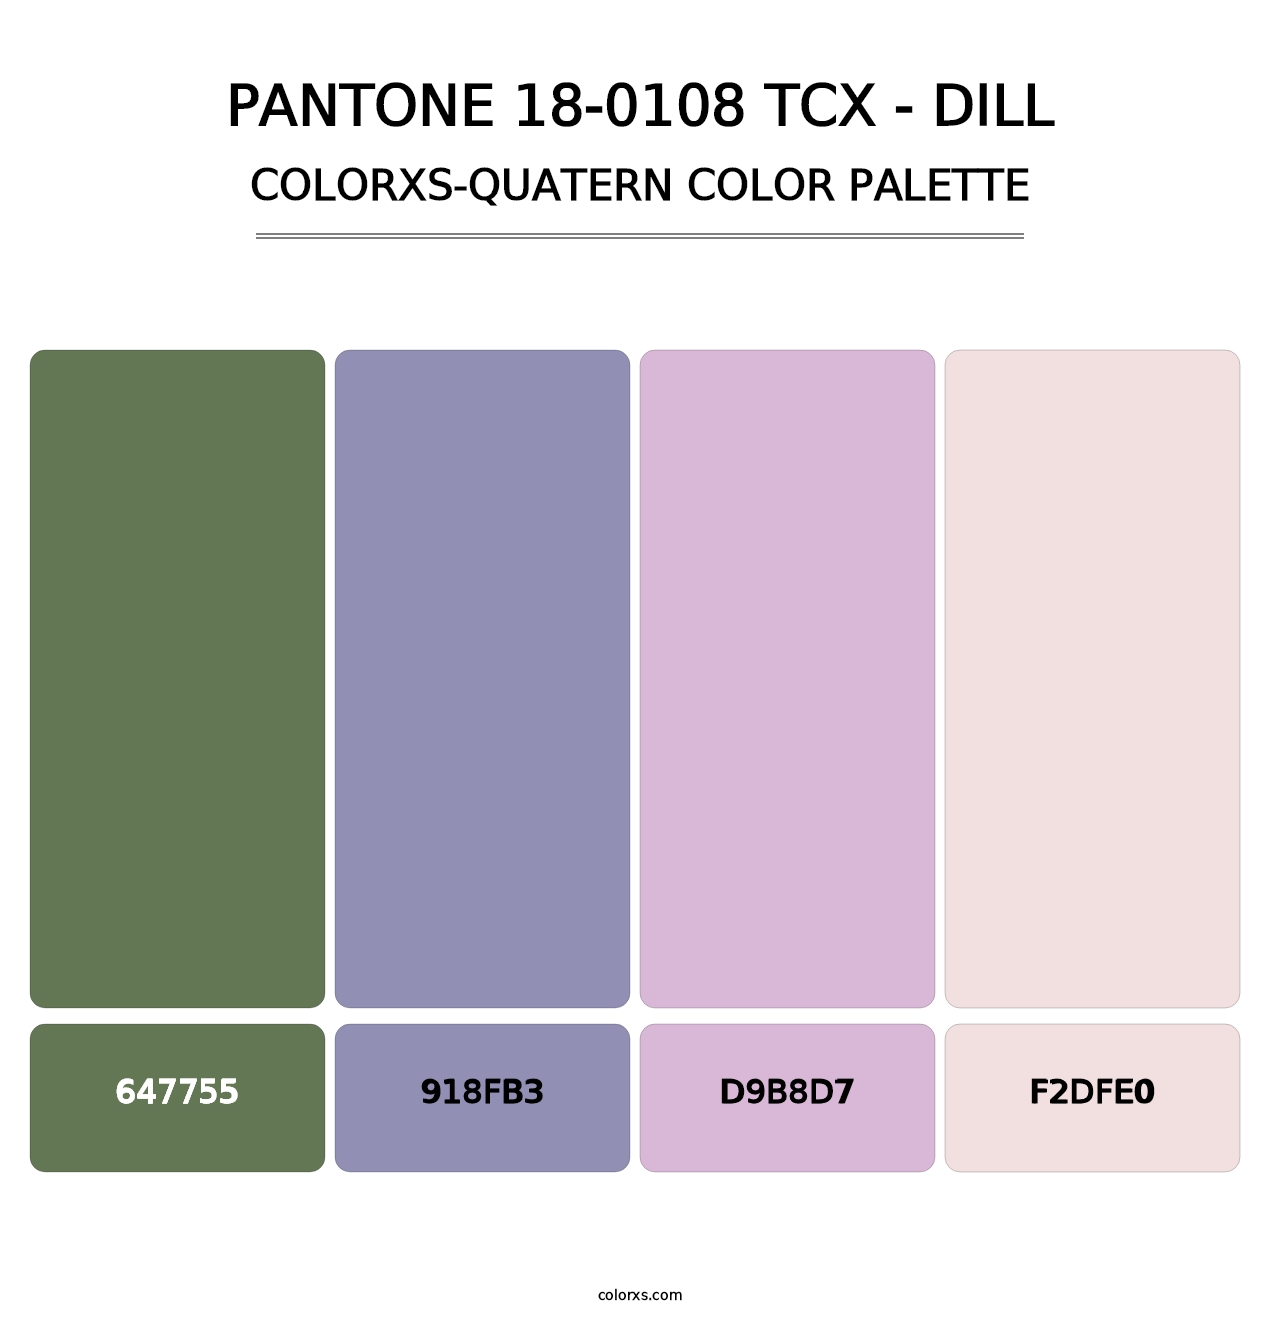 PANTONE 18-0108 TCX - Dill - Colorxs Quatern Palette